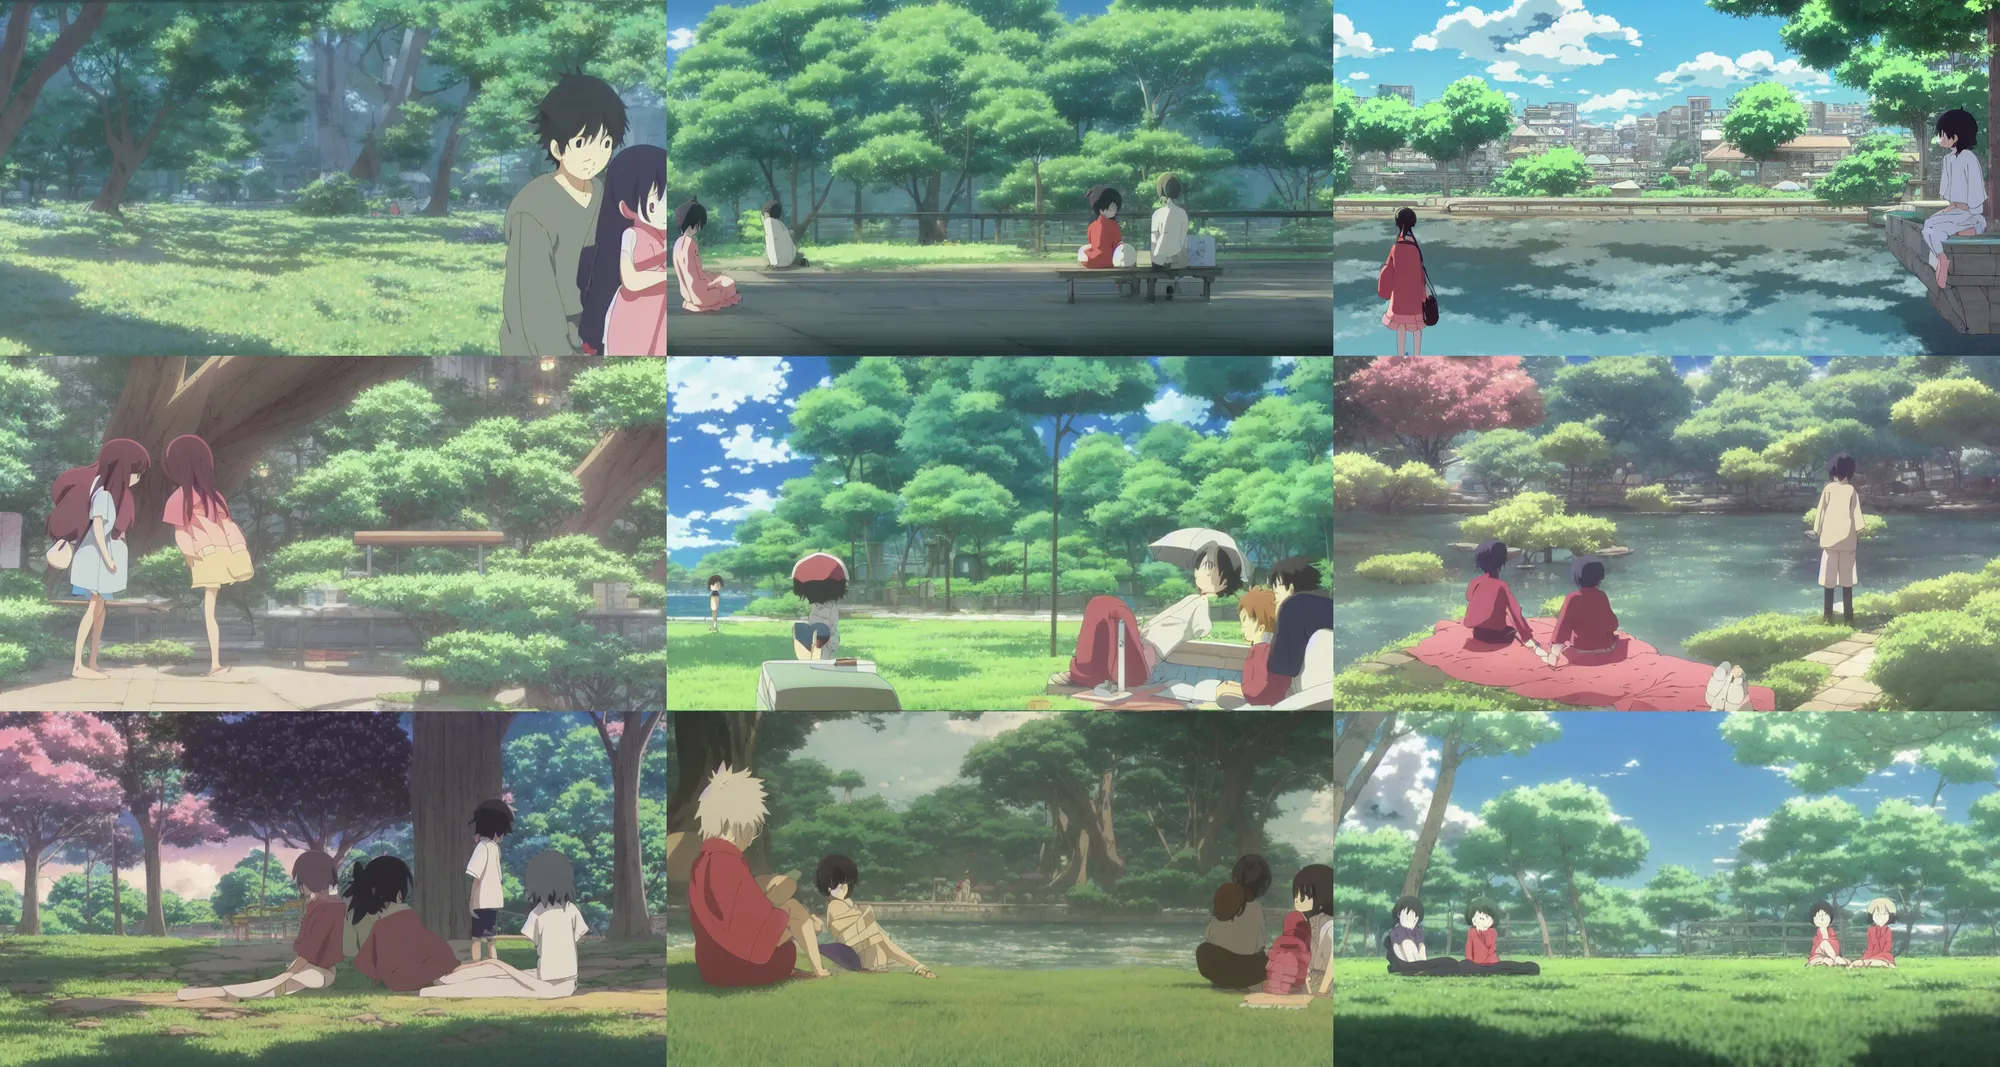 Prompt: beautiful scene from relaxing slice of life anime, calm, cozy, peaceful, by mamoru hosoda, hayao miyazaki, makoto shinkai